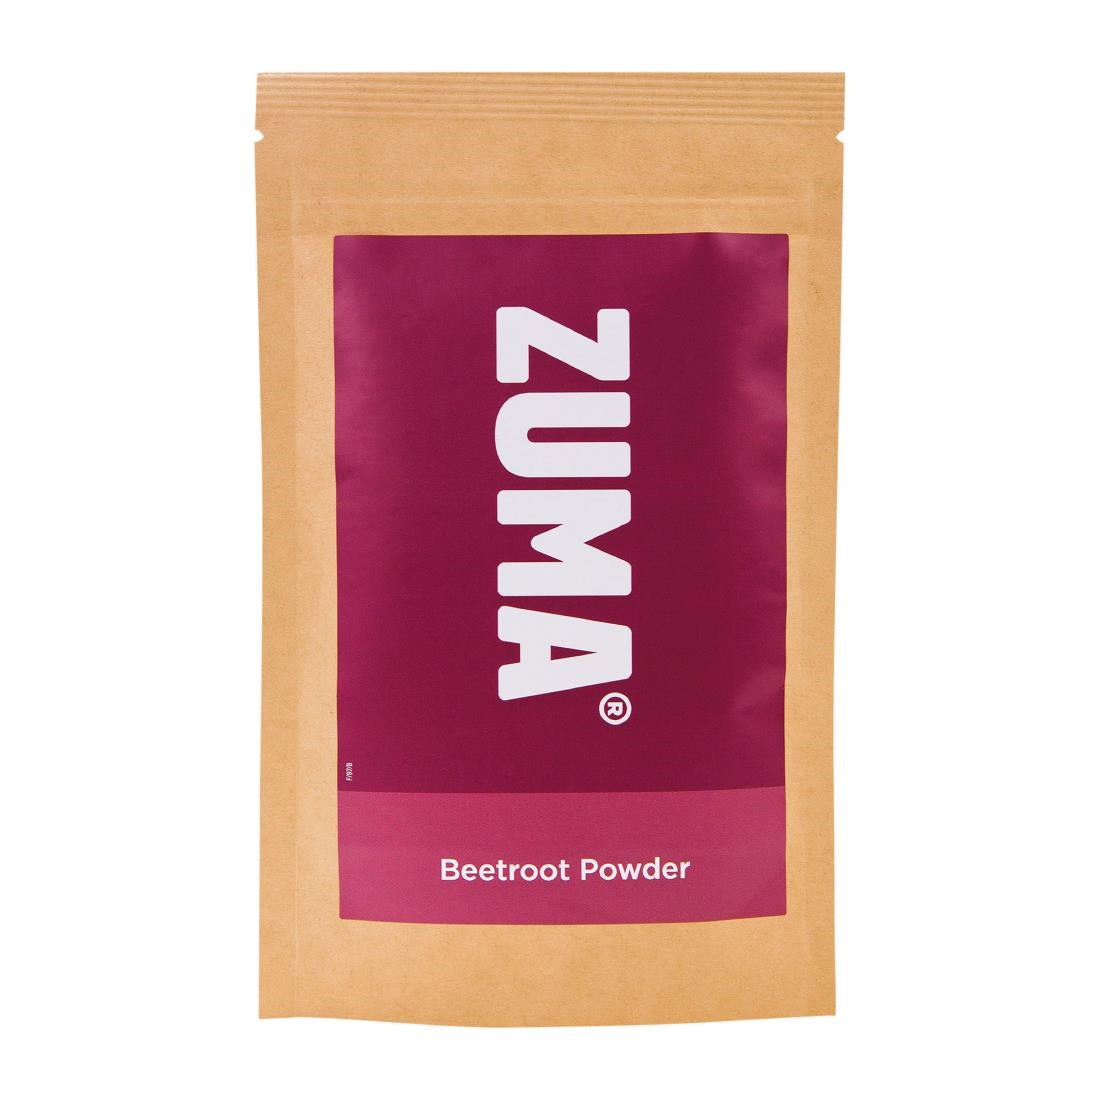 DX625 Zuma Beetroot Powder Pouch 100g